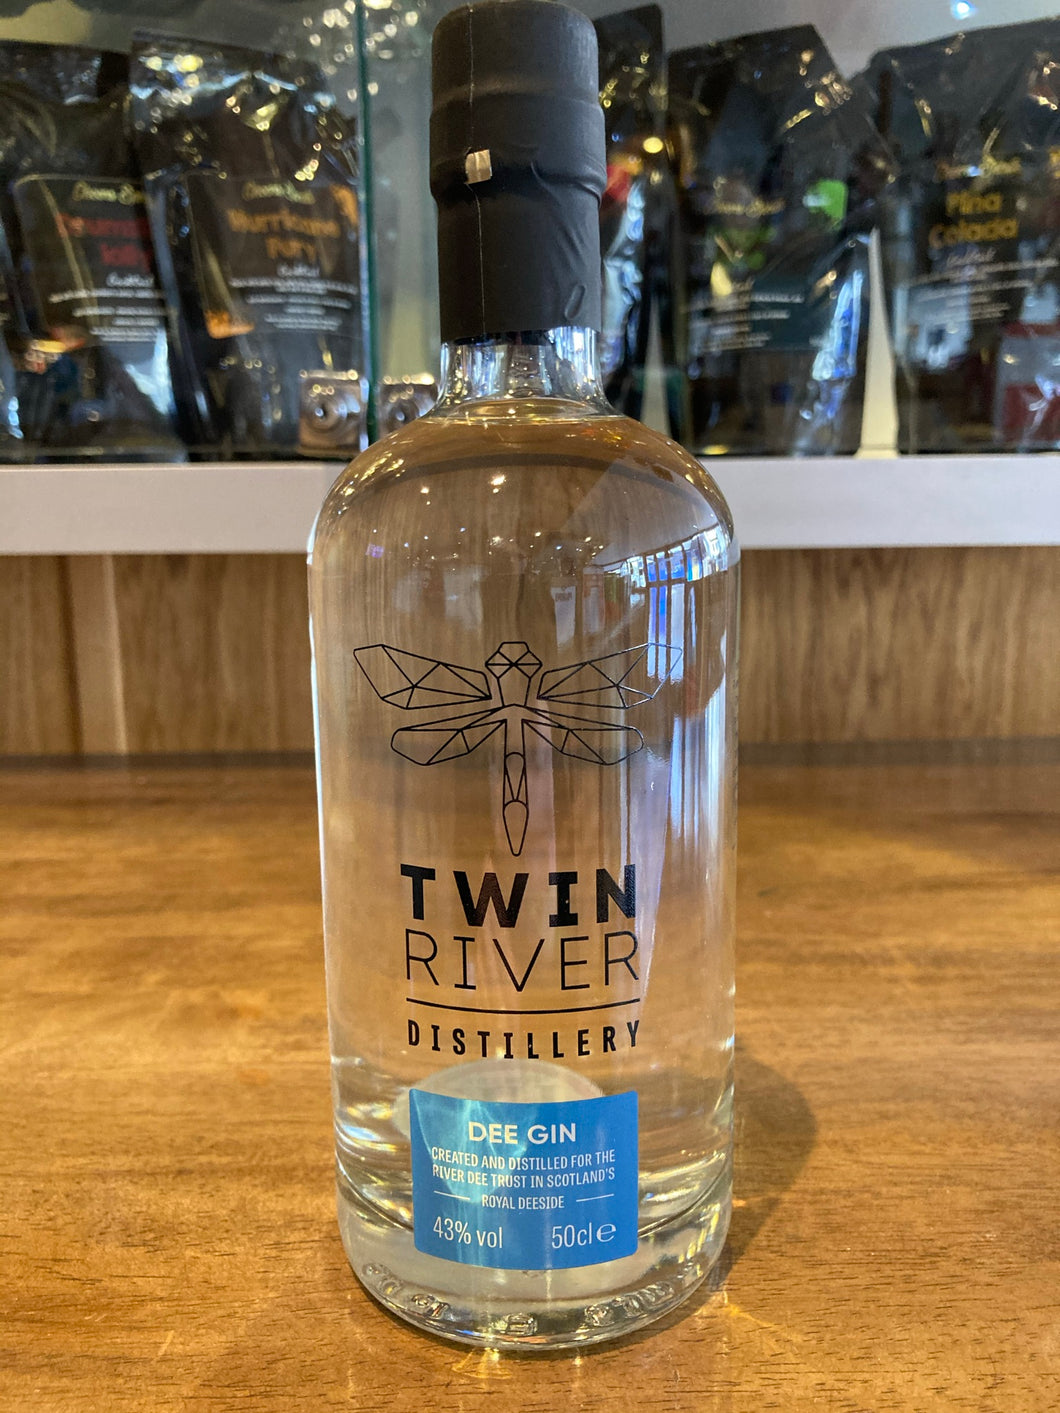 Twin River Dee Gin, 43% abv